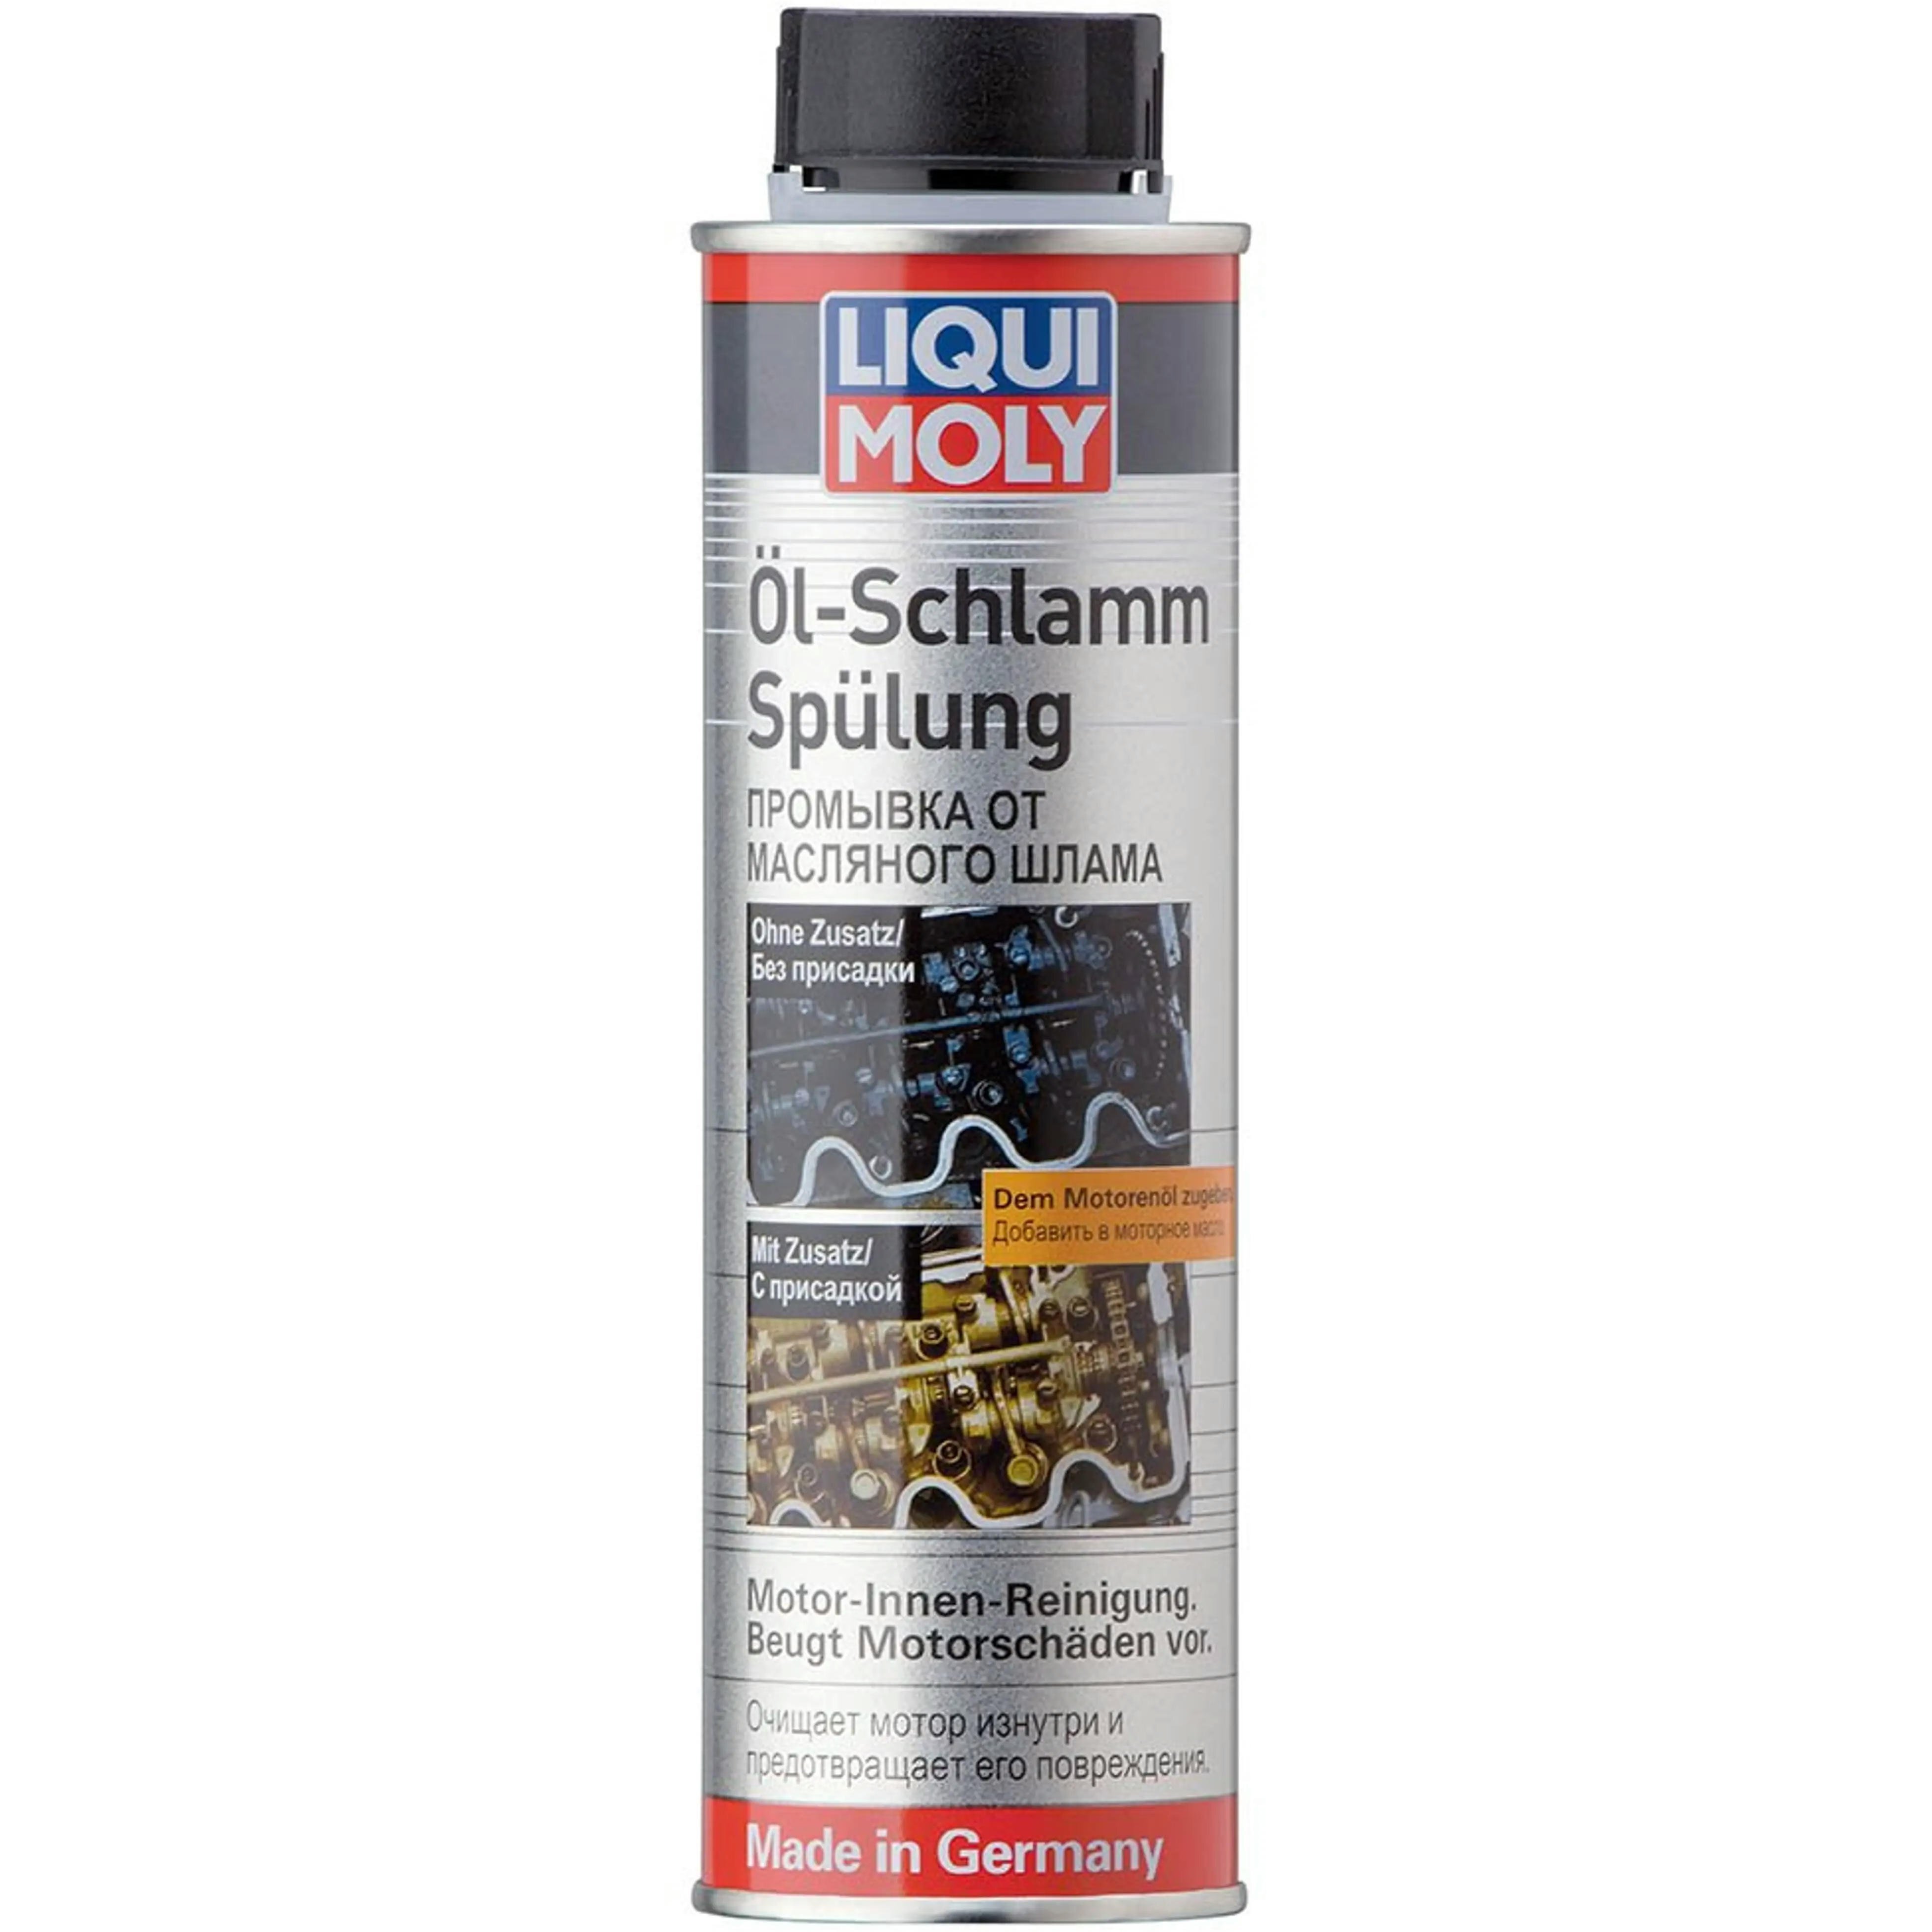 Промывка Liqui Moly от масляного шлама Oil-Schlamm-Spulung 0,3л (4100420019906) фото 1